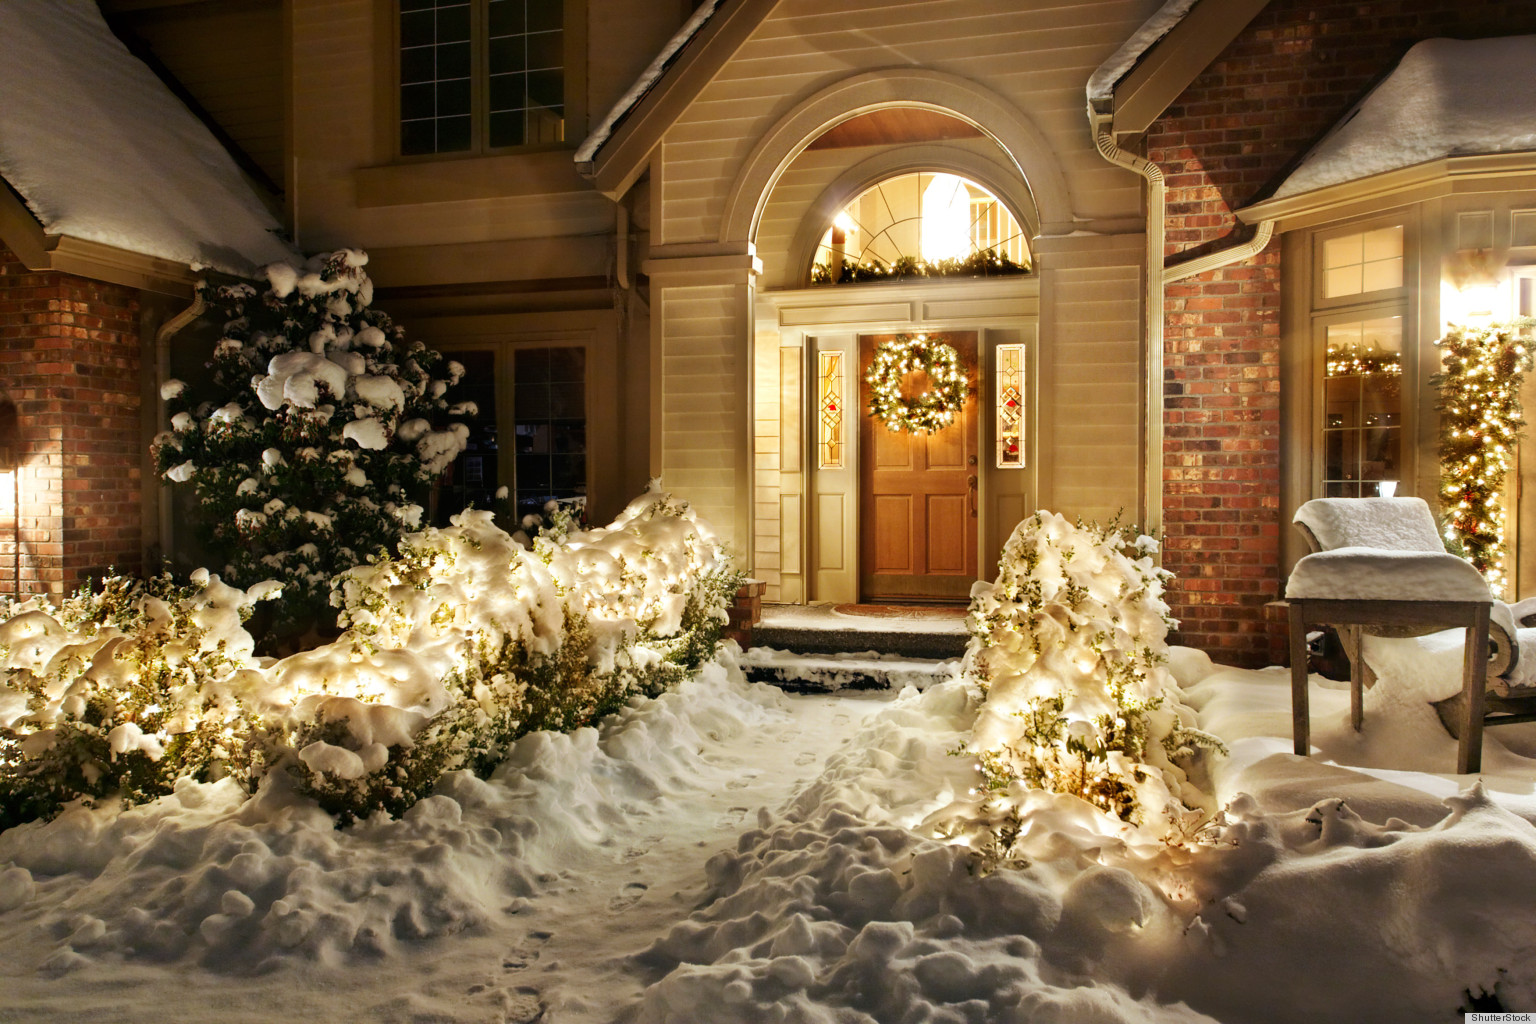 o-CHRISTMAS-2012-OUTDOOR-LIGHTS-facebook.jpg